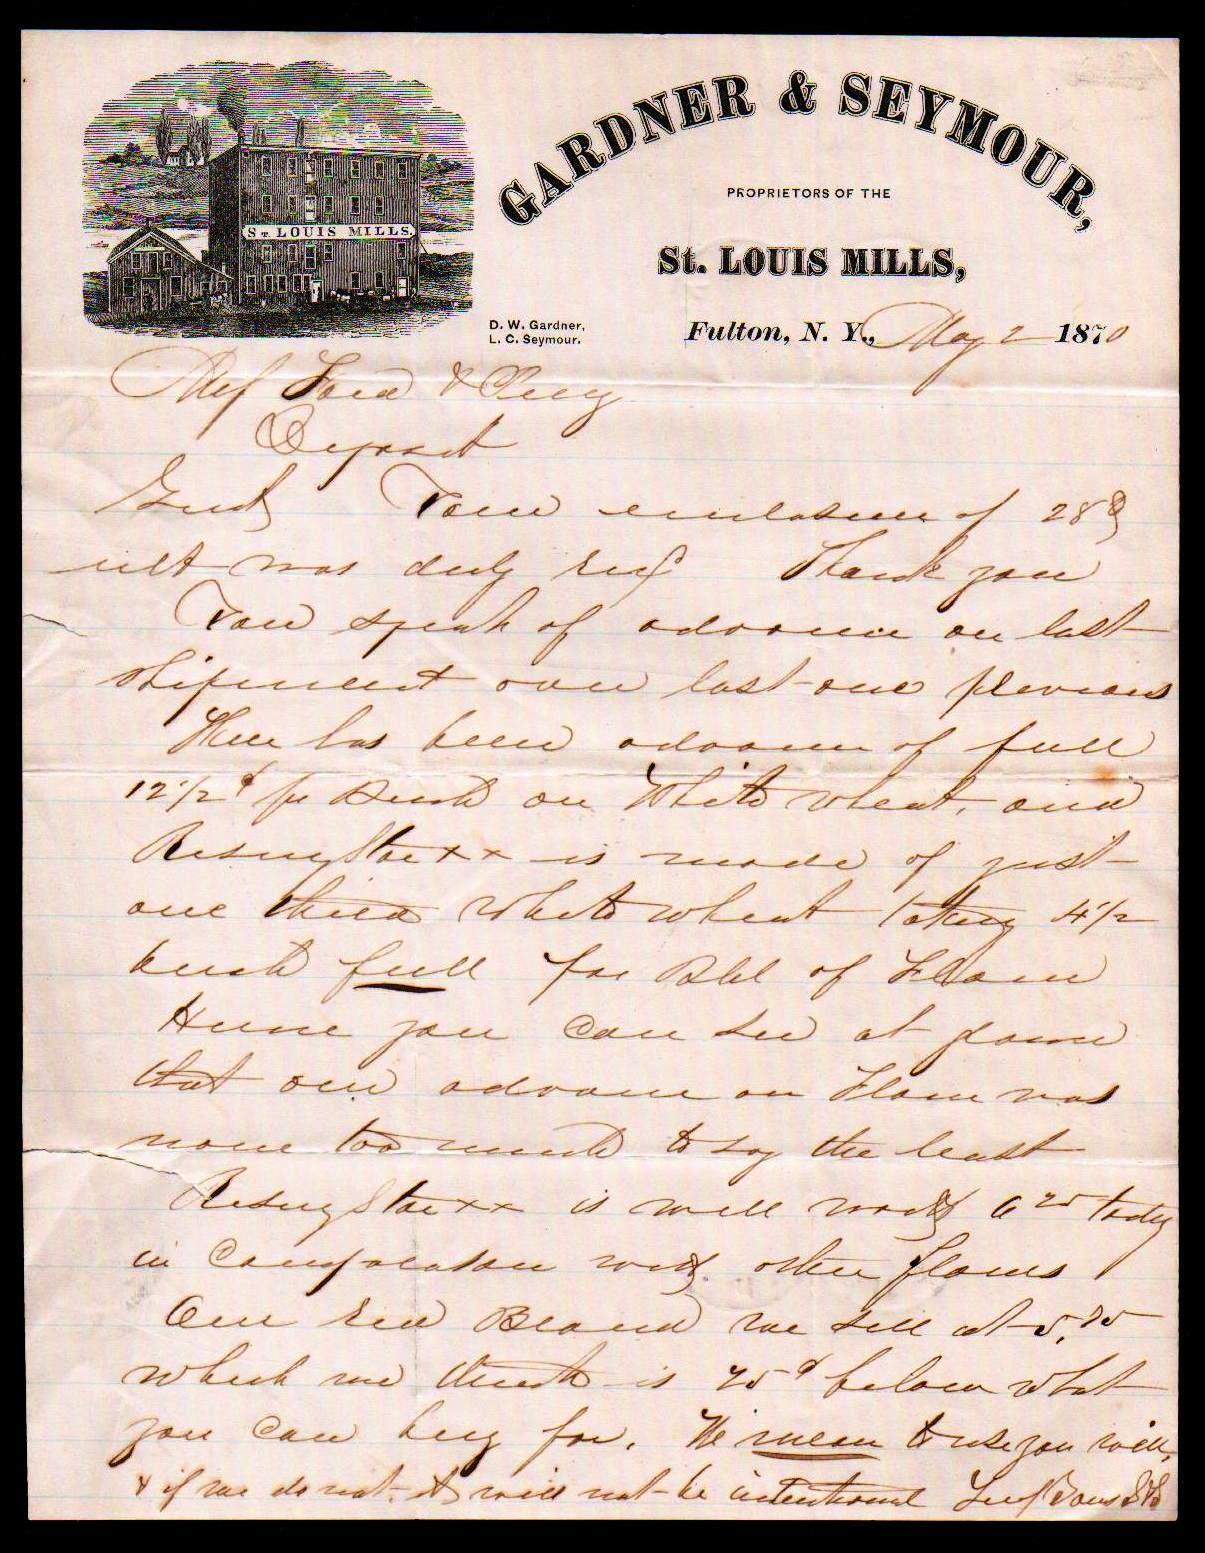 1870 Futton NY - Gardner & Seymour - St Louis Mills - History Letter Head Bill